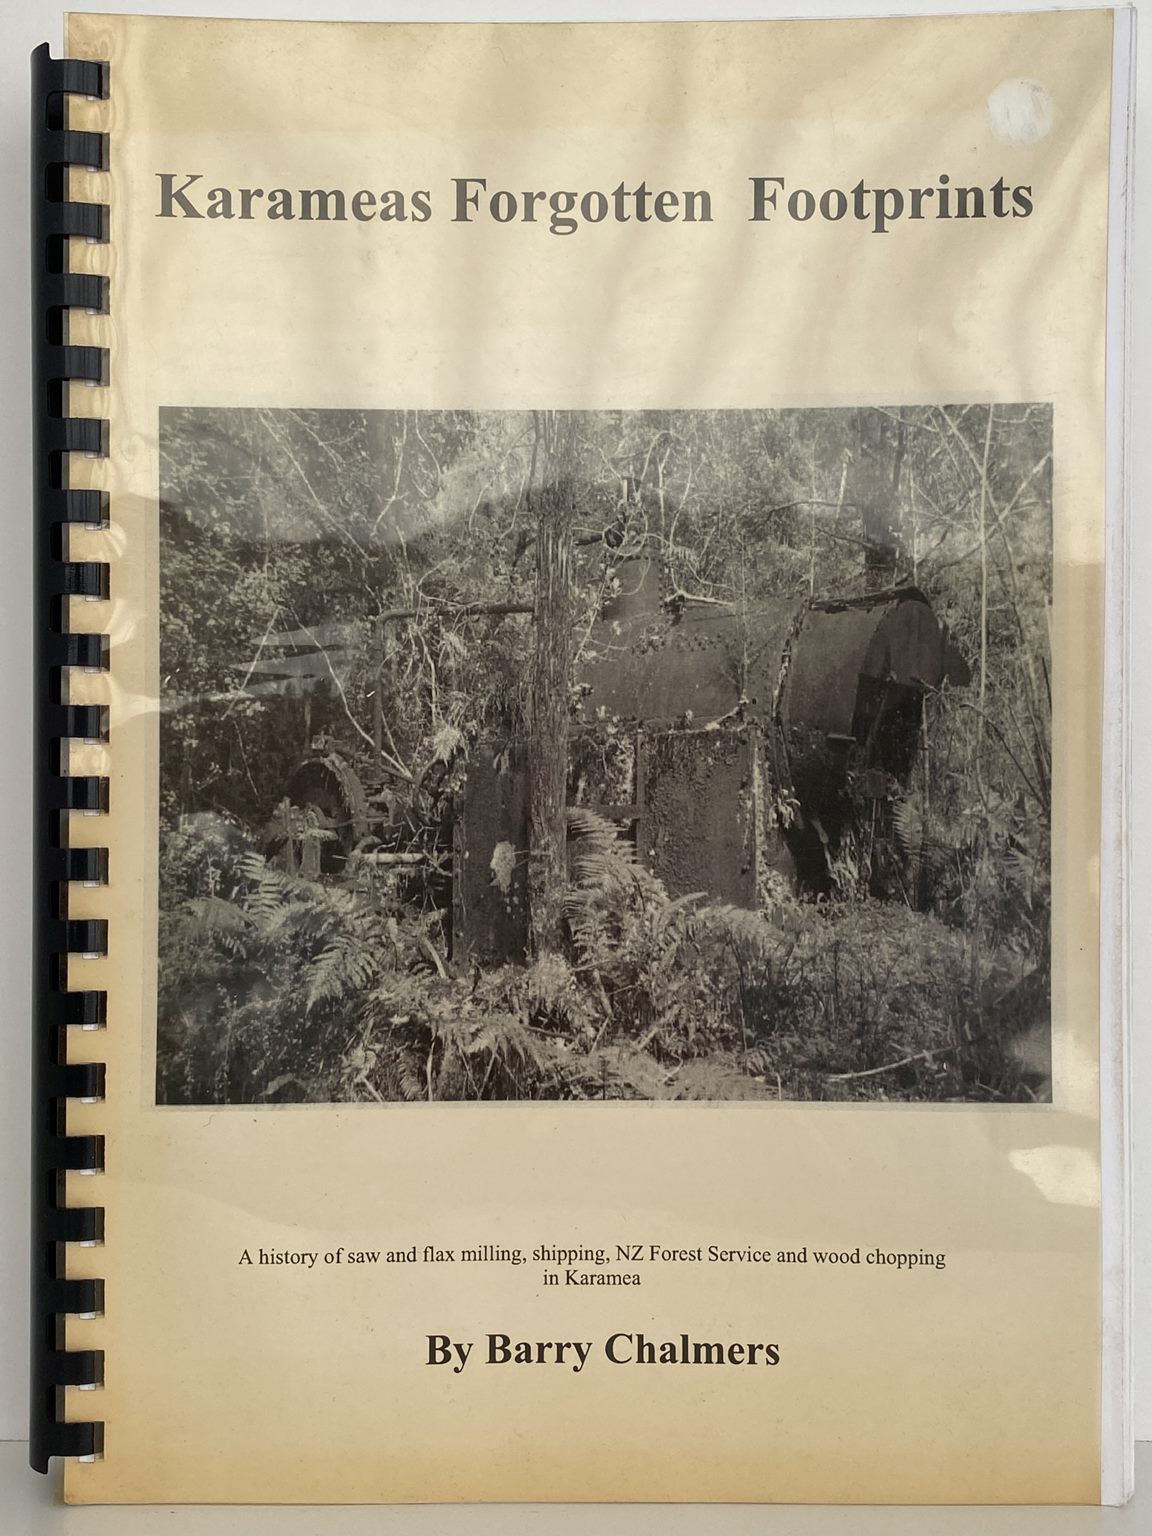 KARAMEAS FORGOTTEN FOOTPRINTS: A History of Saw and Flax Milling in Karamea